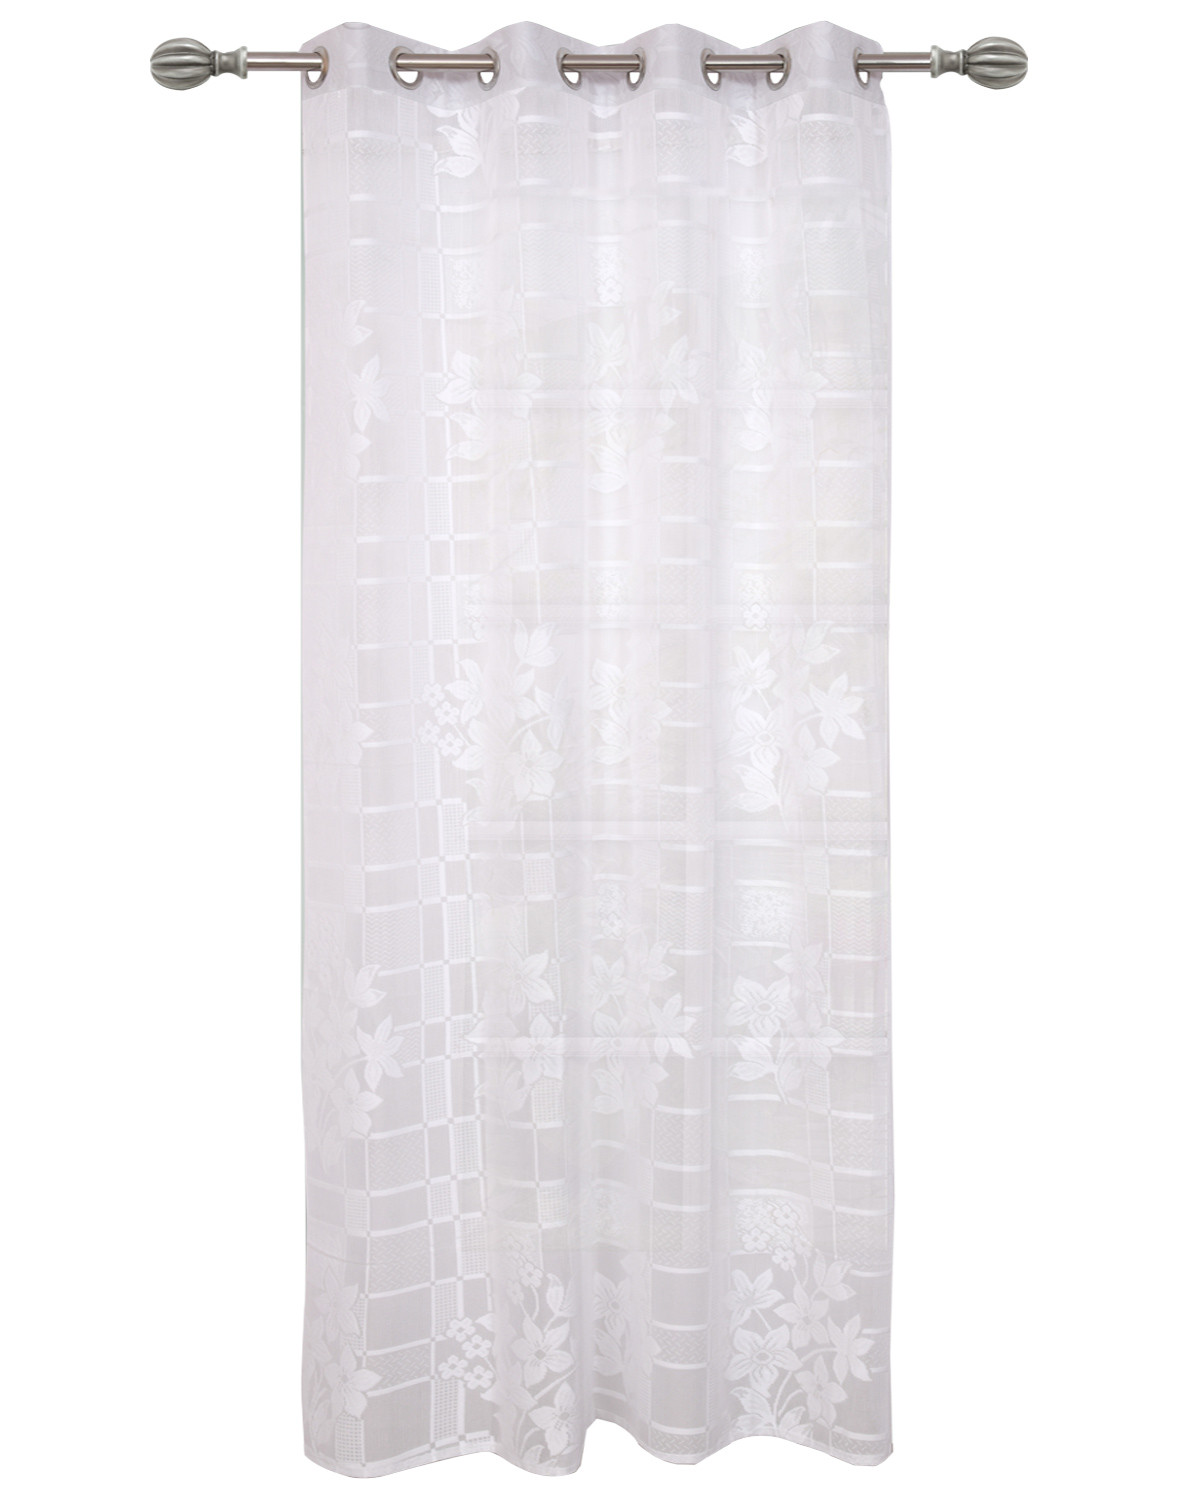 Kuber Industries Flower Design 7 Feet Door Curtain For Living Room, Bed Room, Kids Room With 8 Eyelet (White)